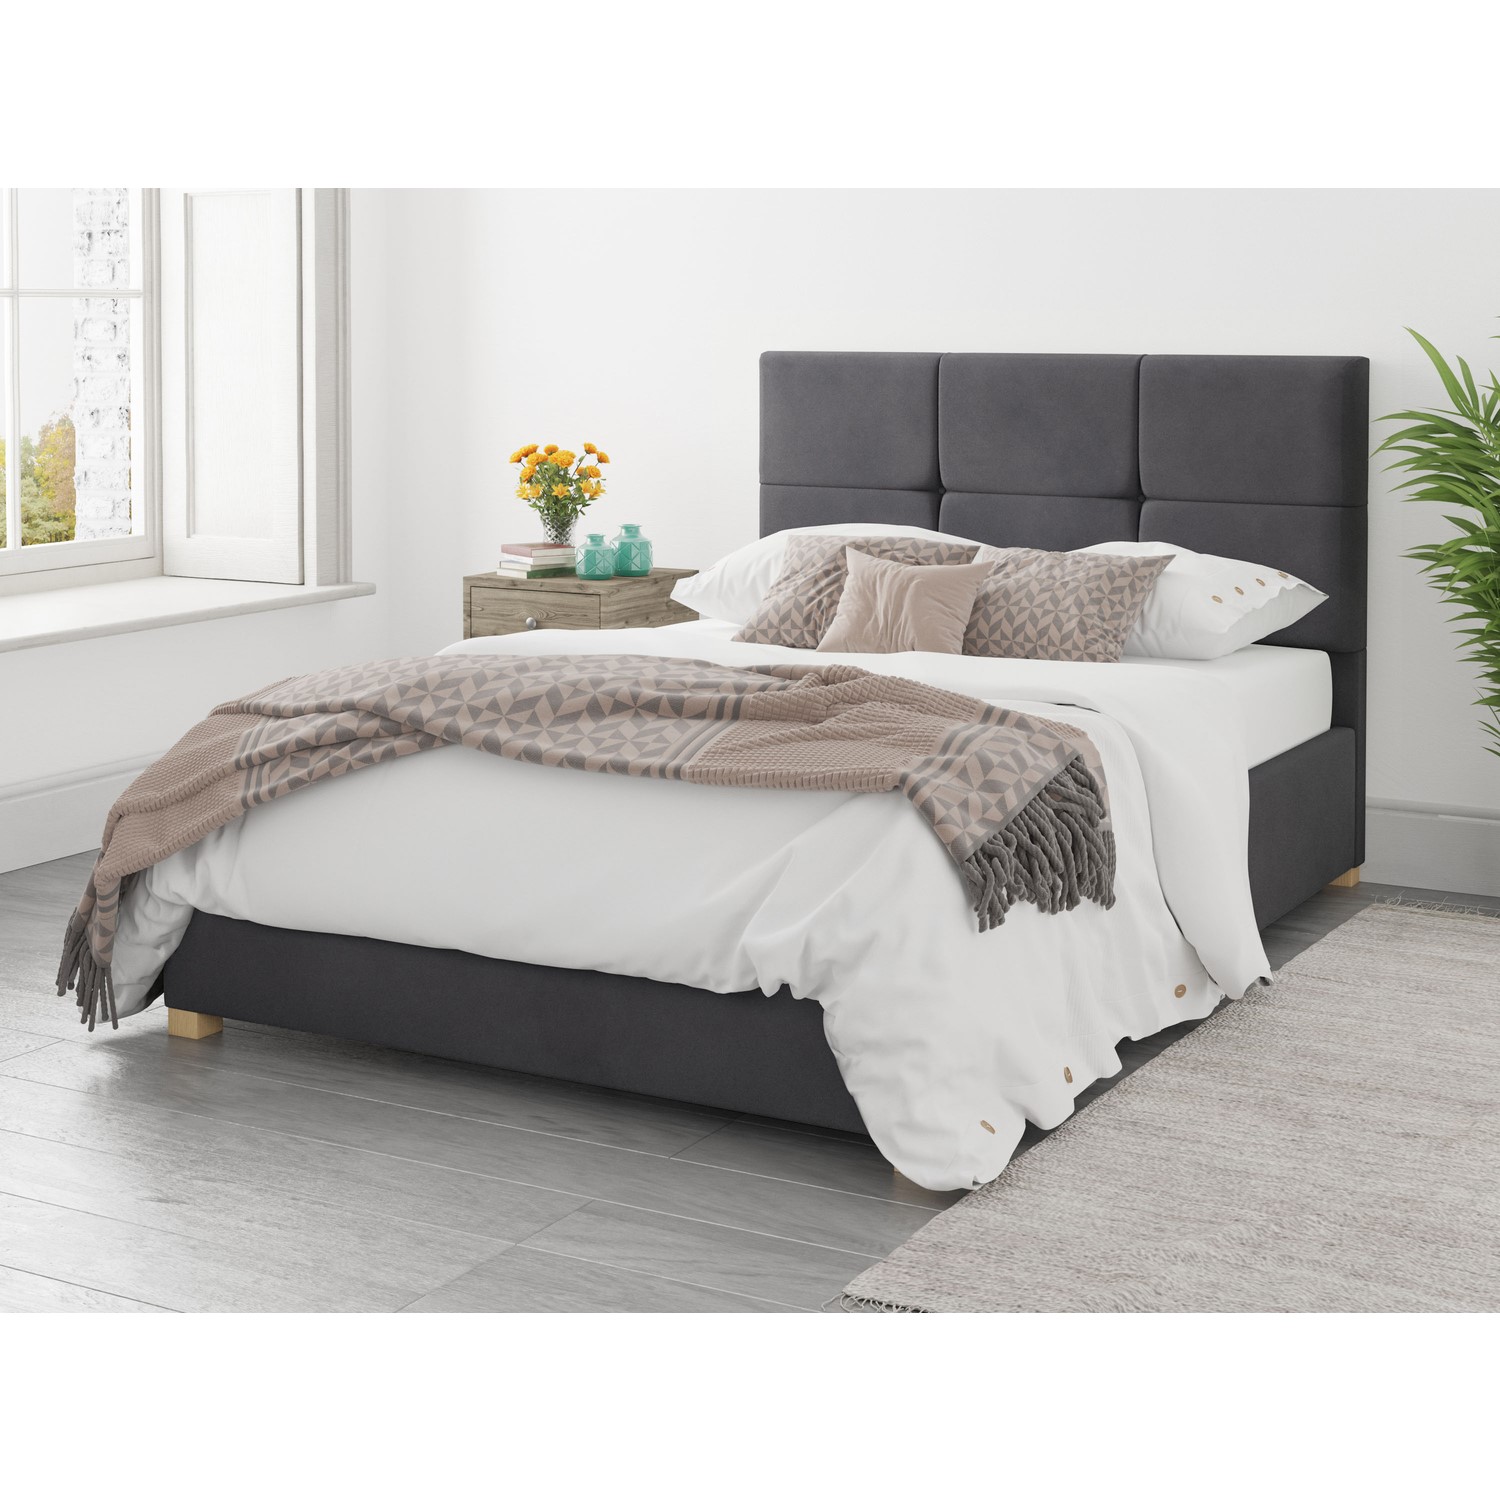 Read more about Dark grey velvet double ottoman bed farringdon aspire